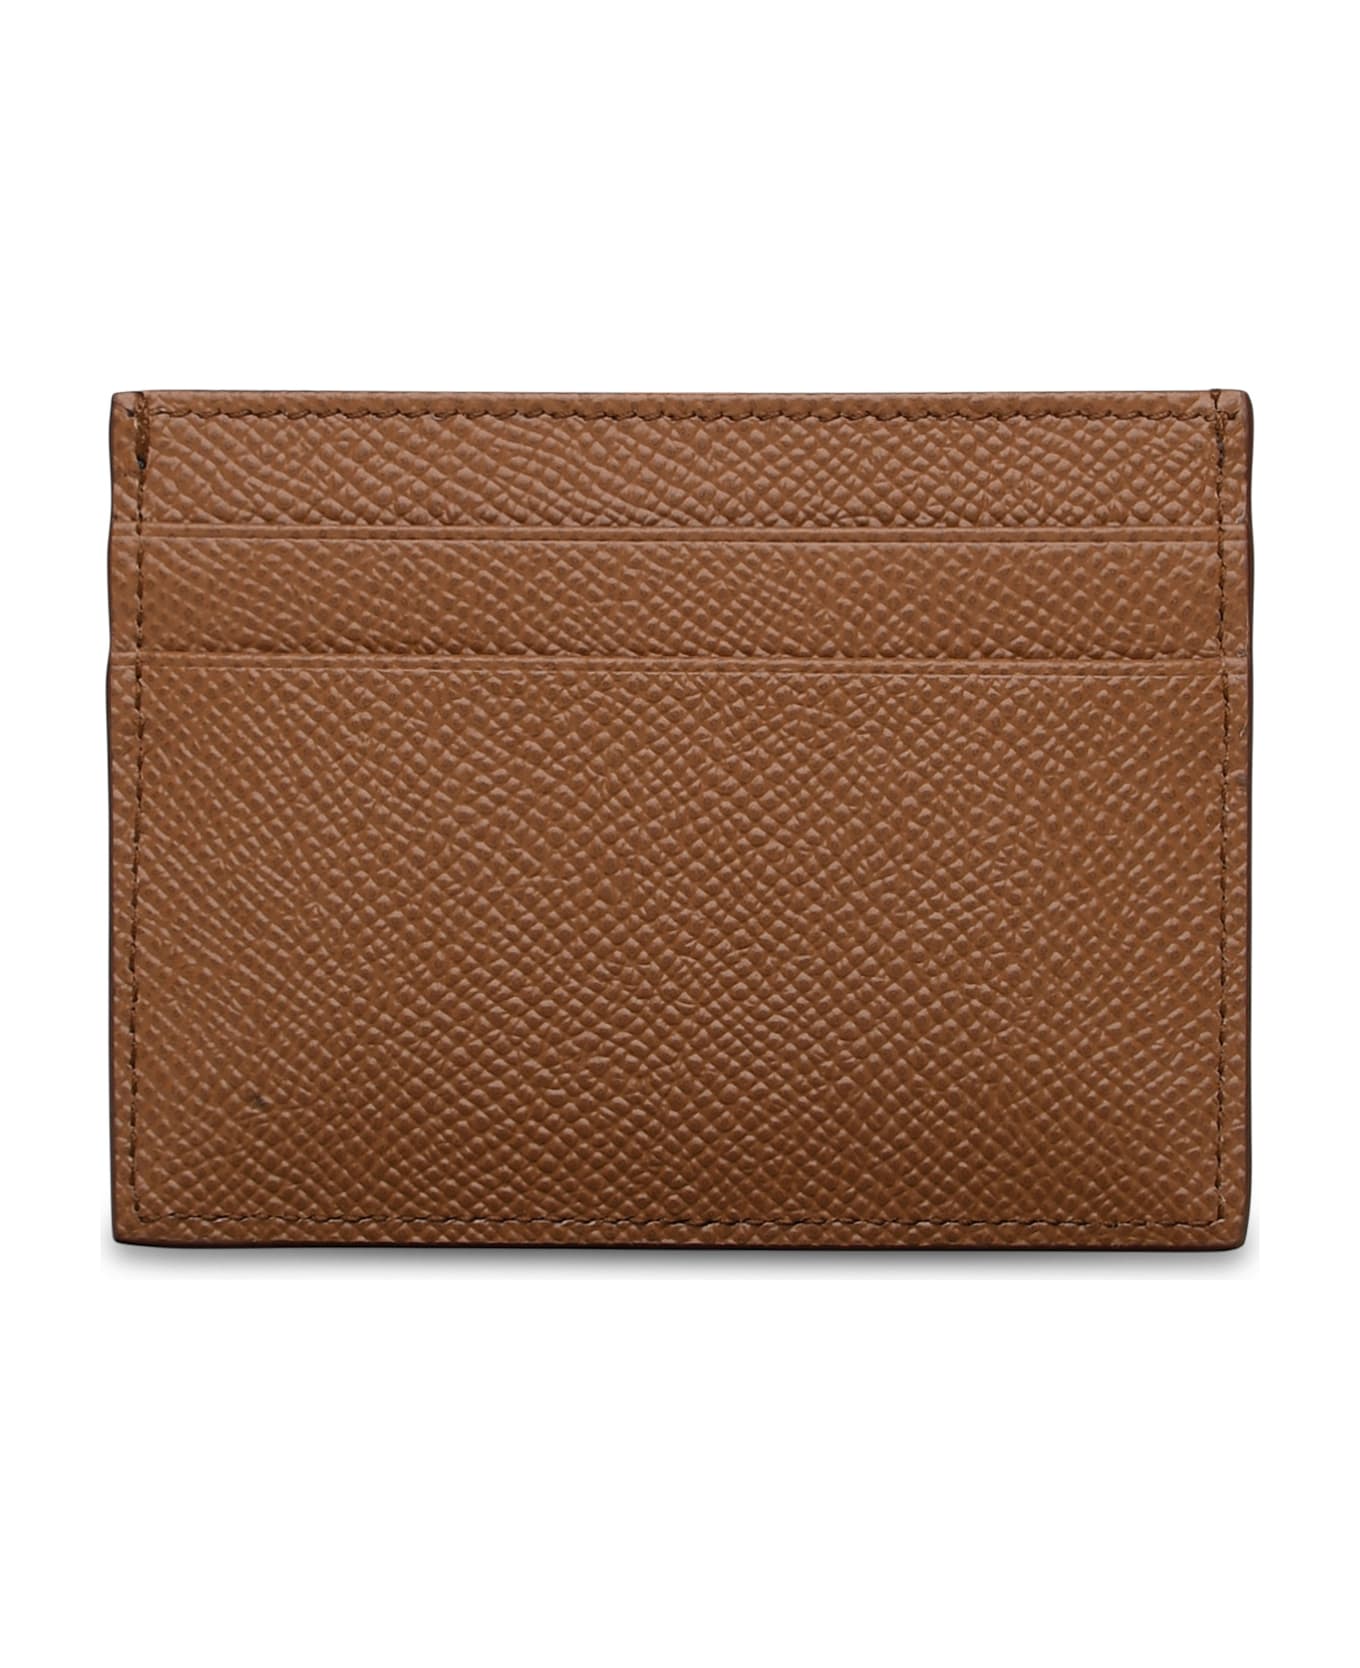 Dolce & Gabbana Brown Calf Leather Card Holder - Brown